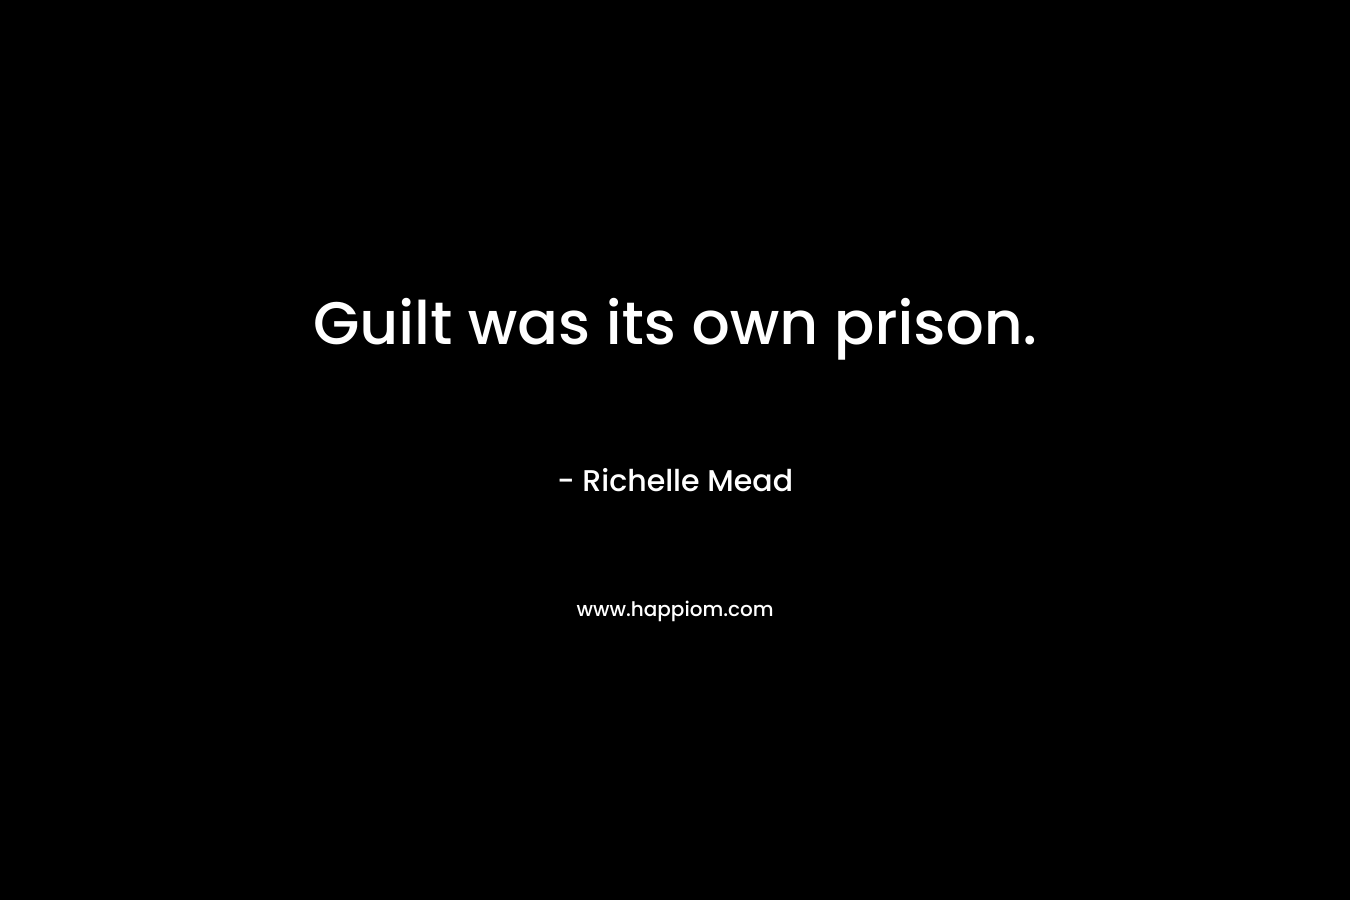 Guilt was its own prison.